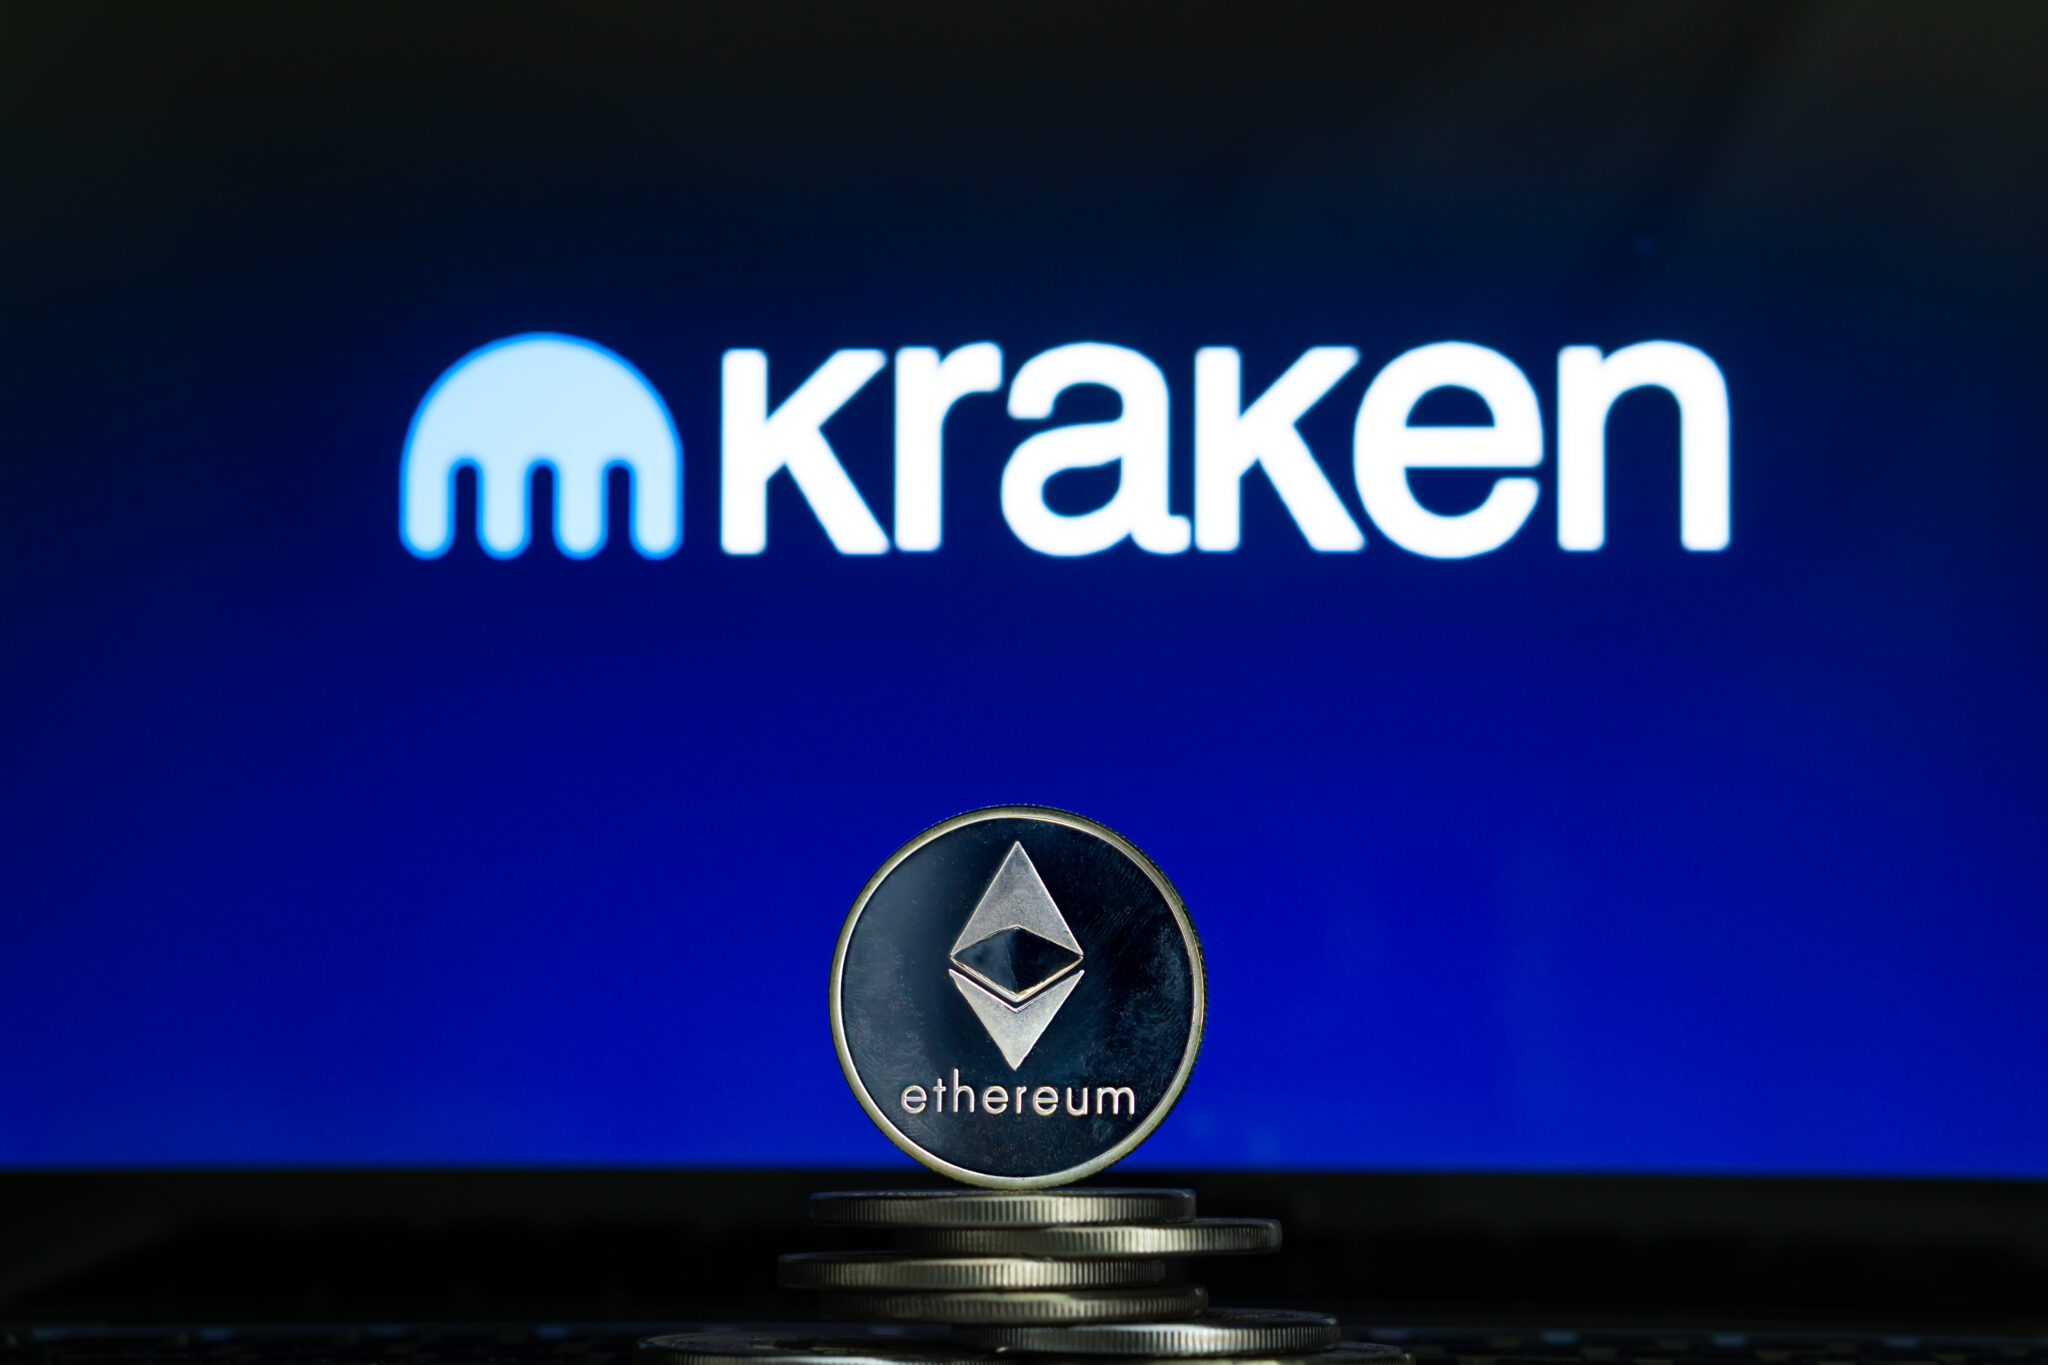 Kraken logo with Ethereum coin